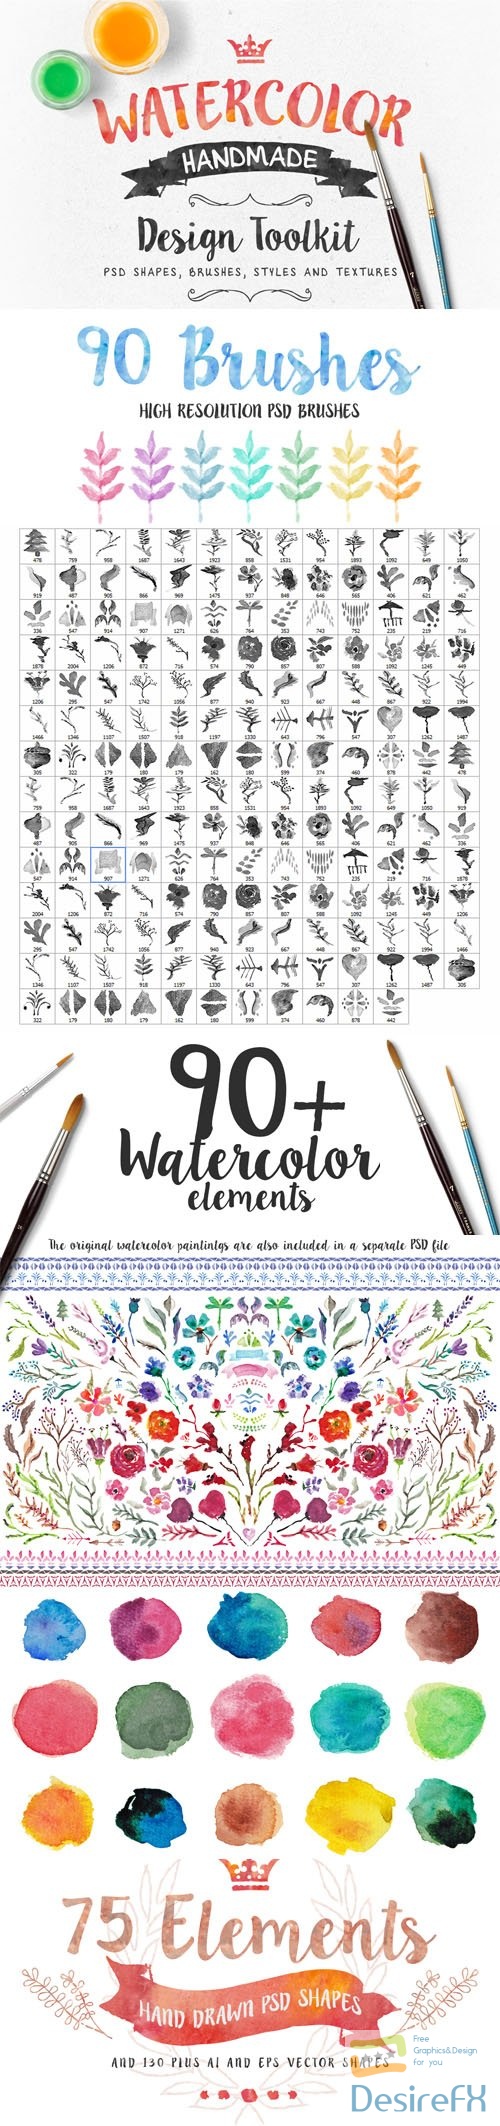 Watercolor Handmade Design Toolkit 300+ Elements for Photoshop & Illustrator